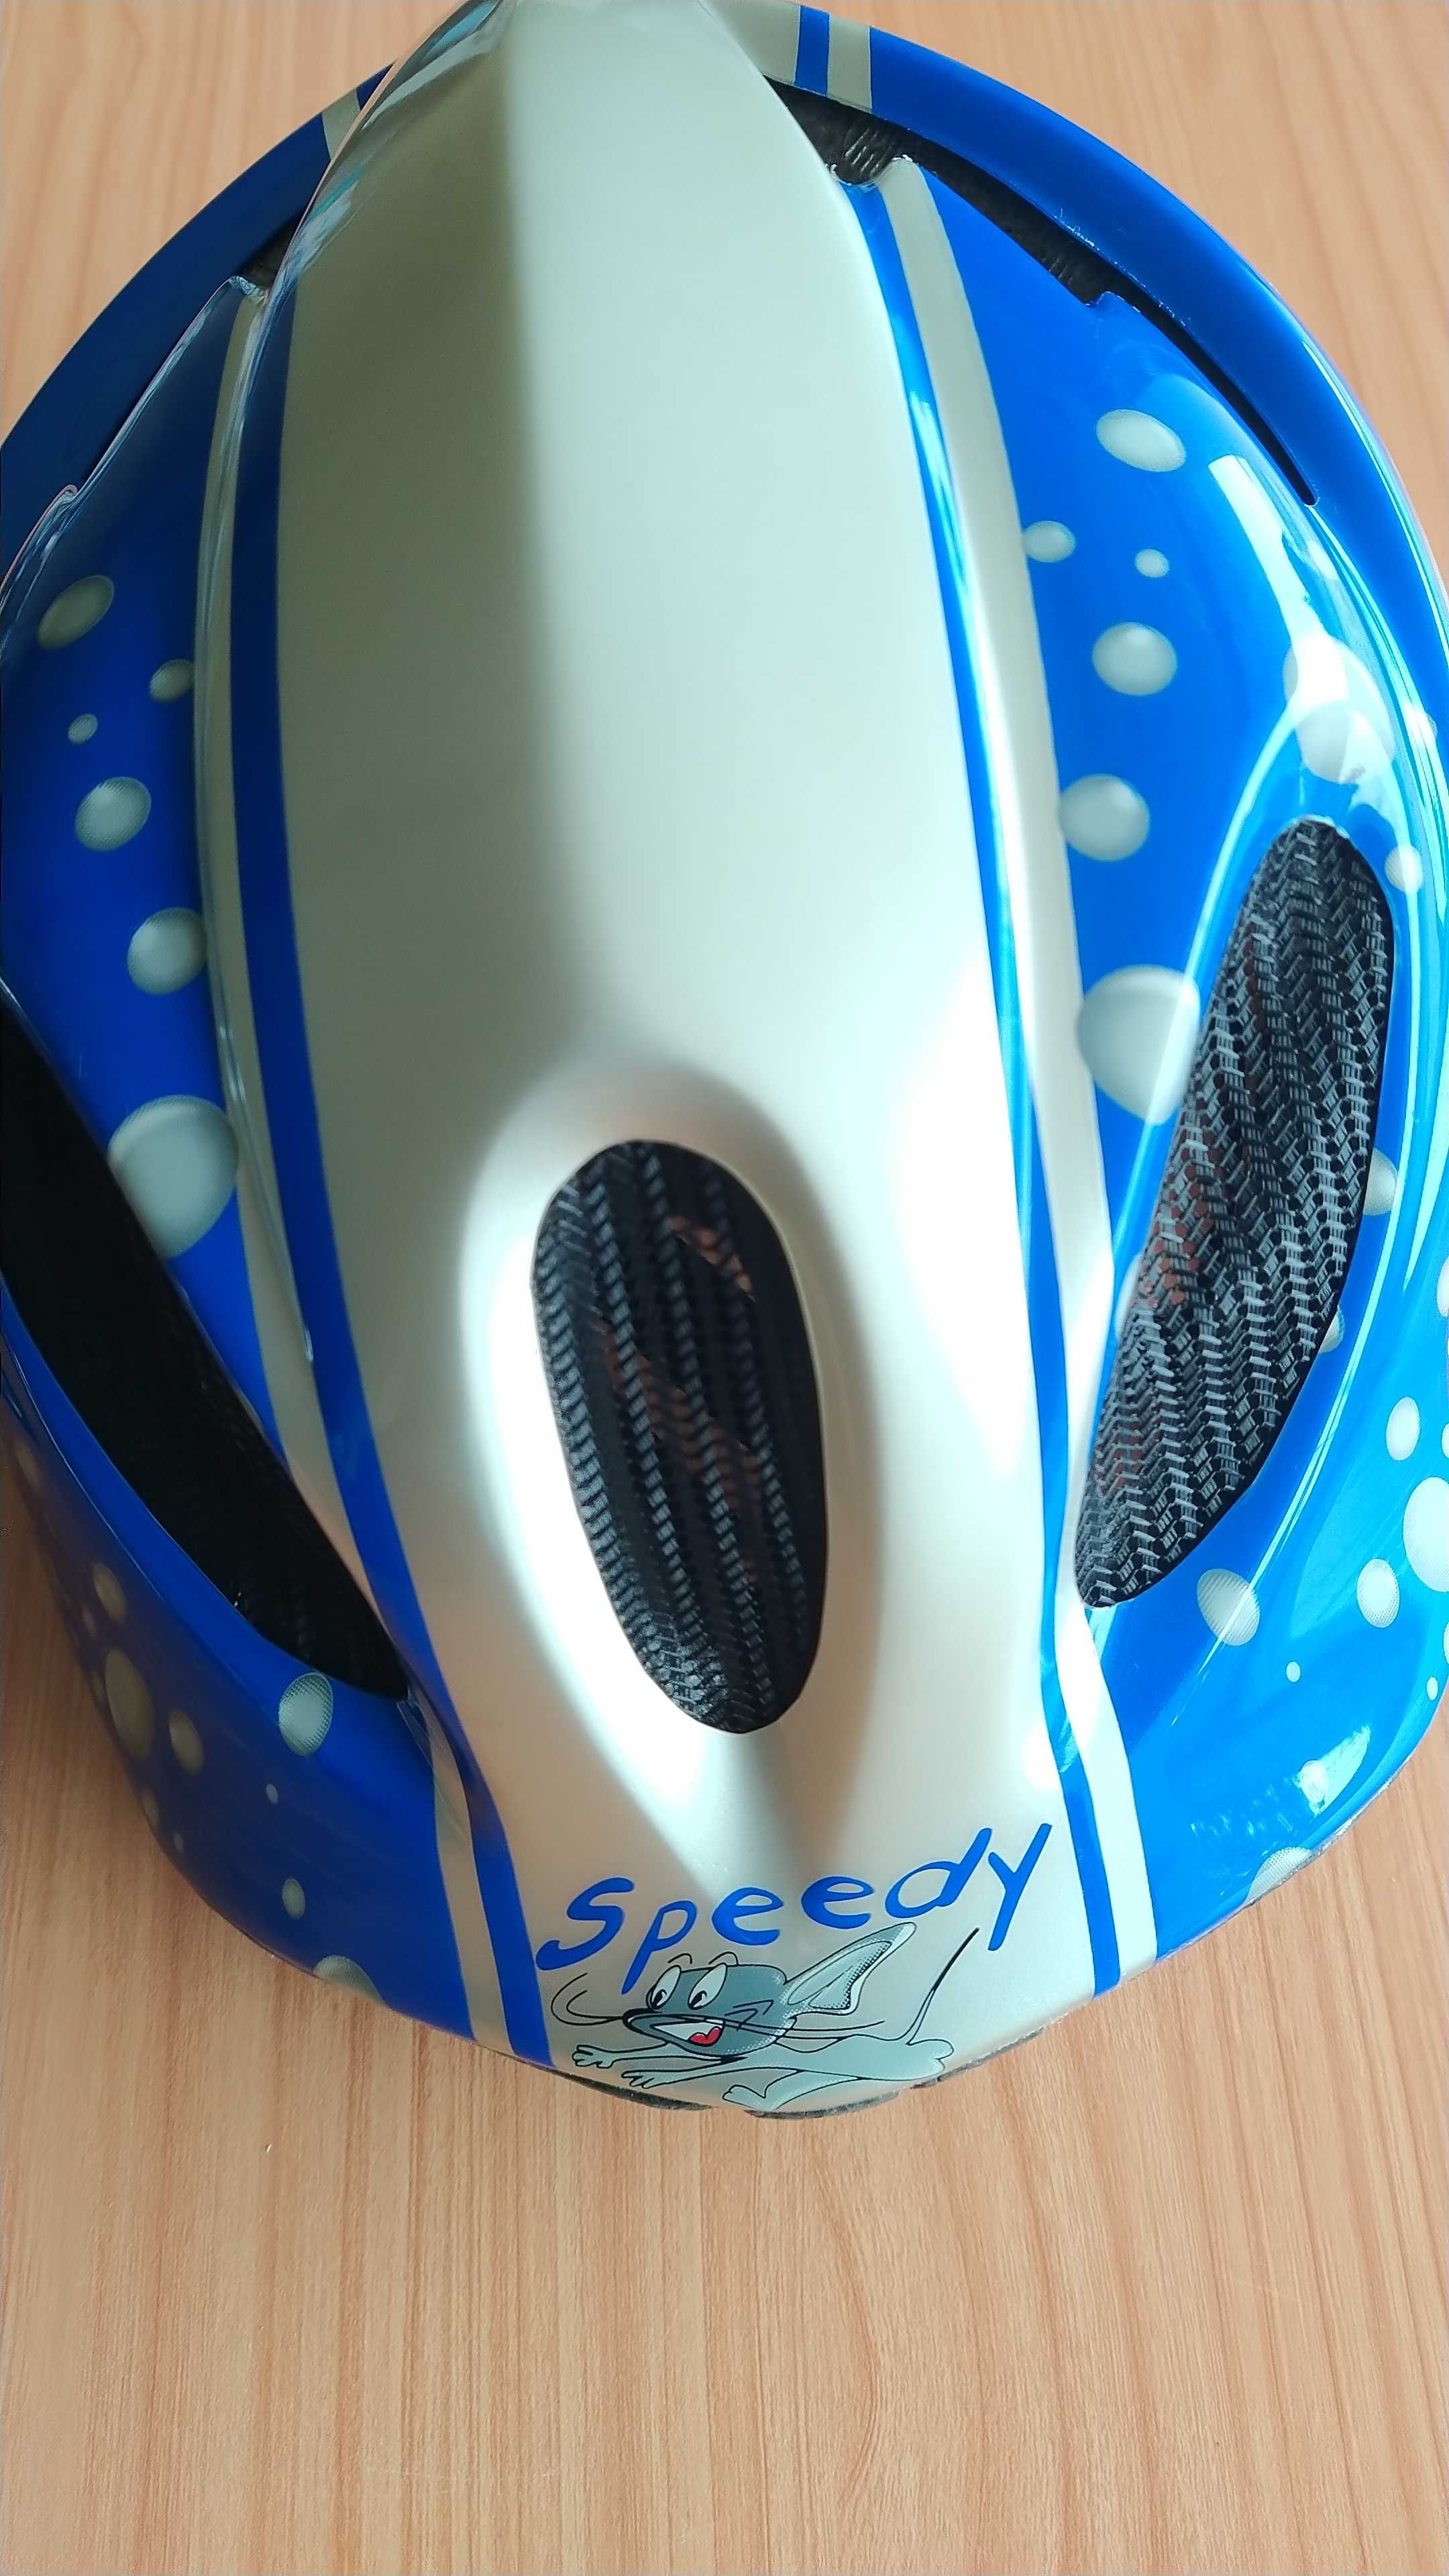 Capacete criança Polisport Speedy Mouse - Azul/Prata